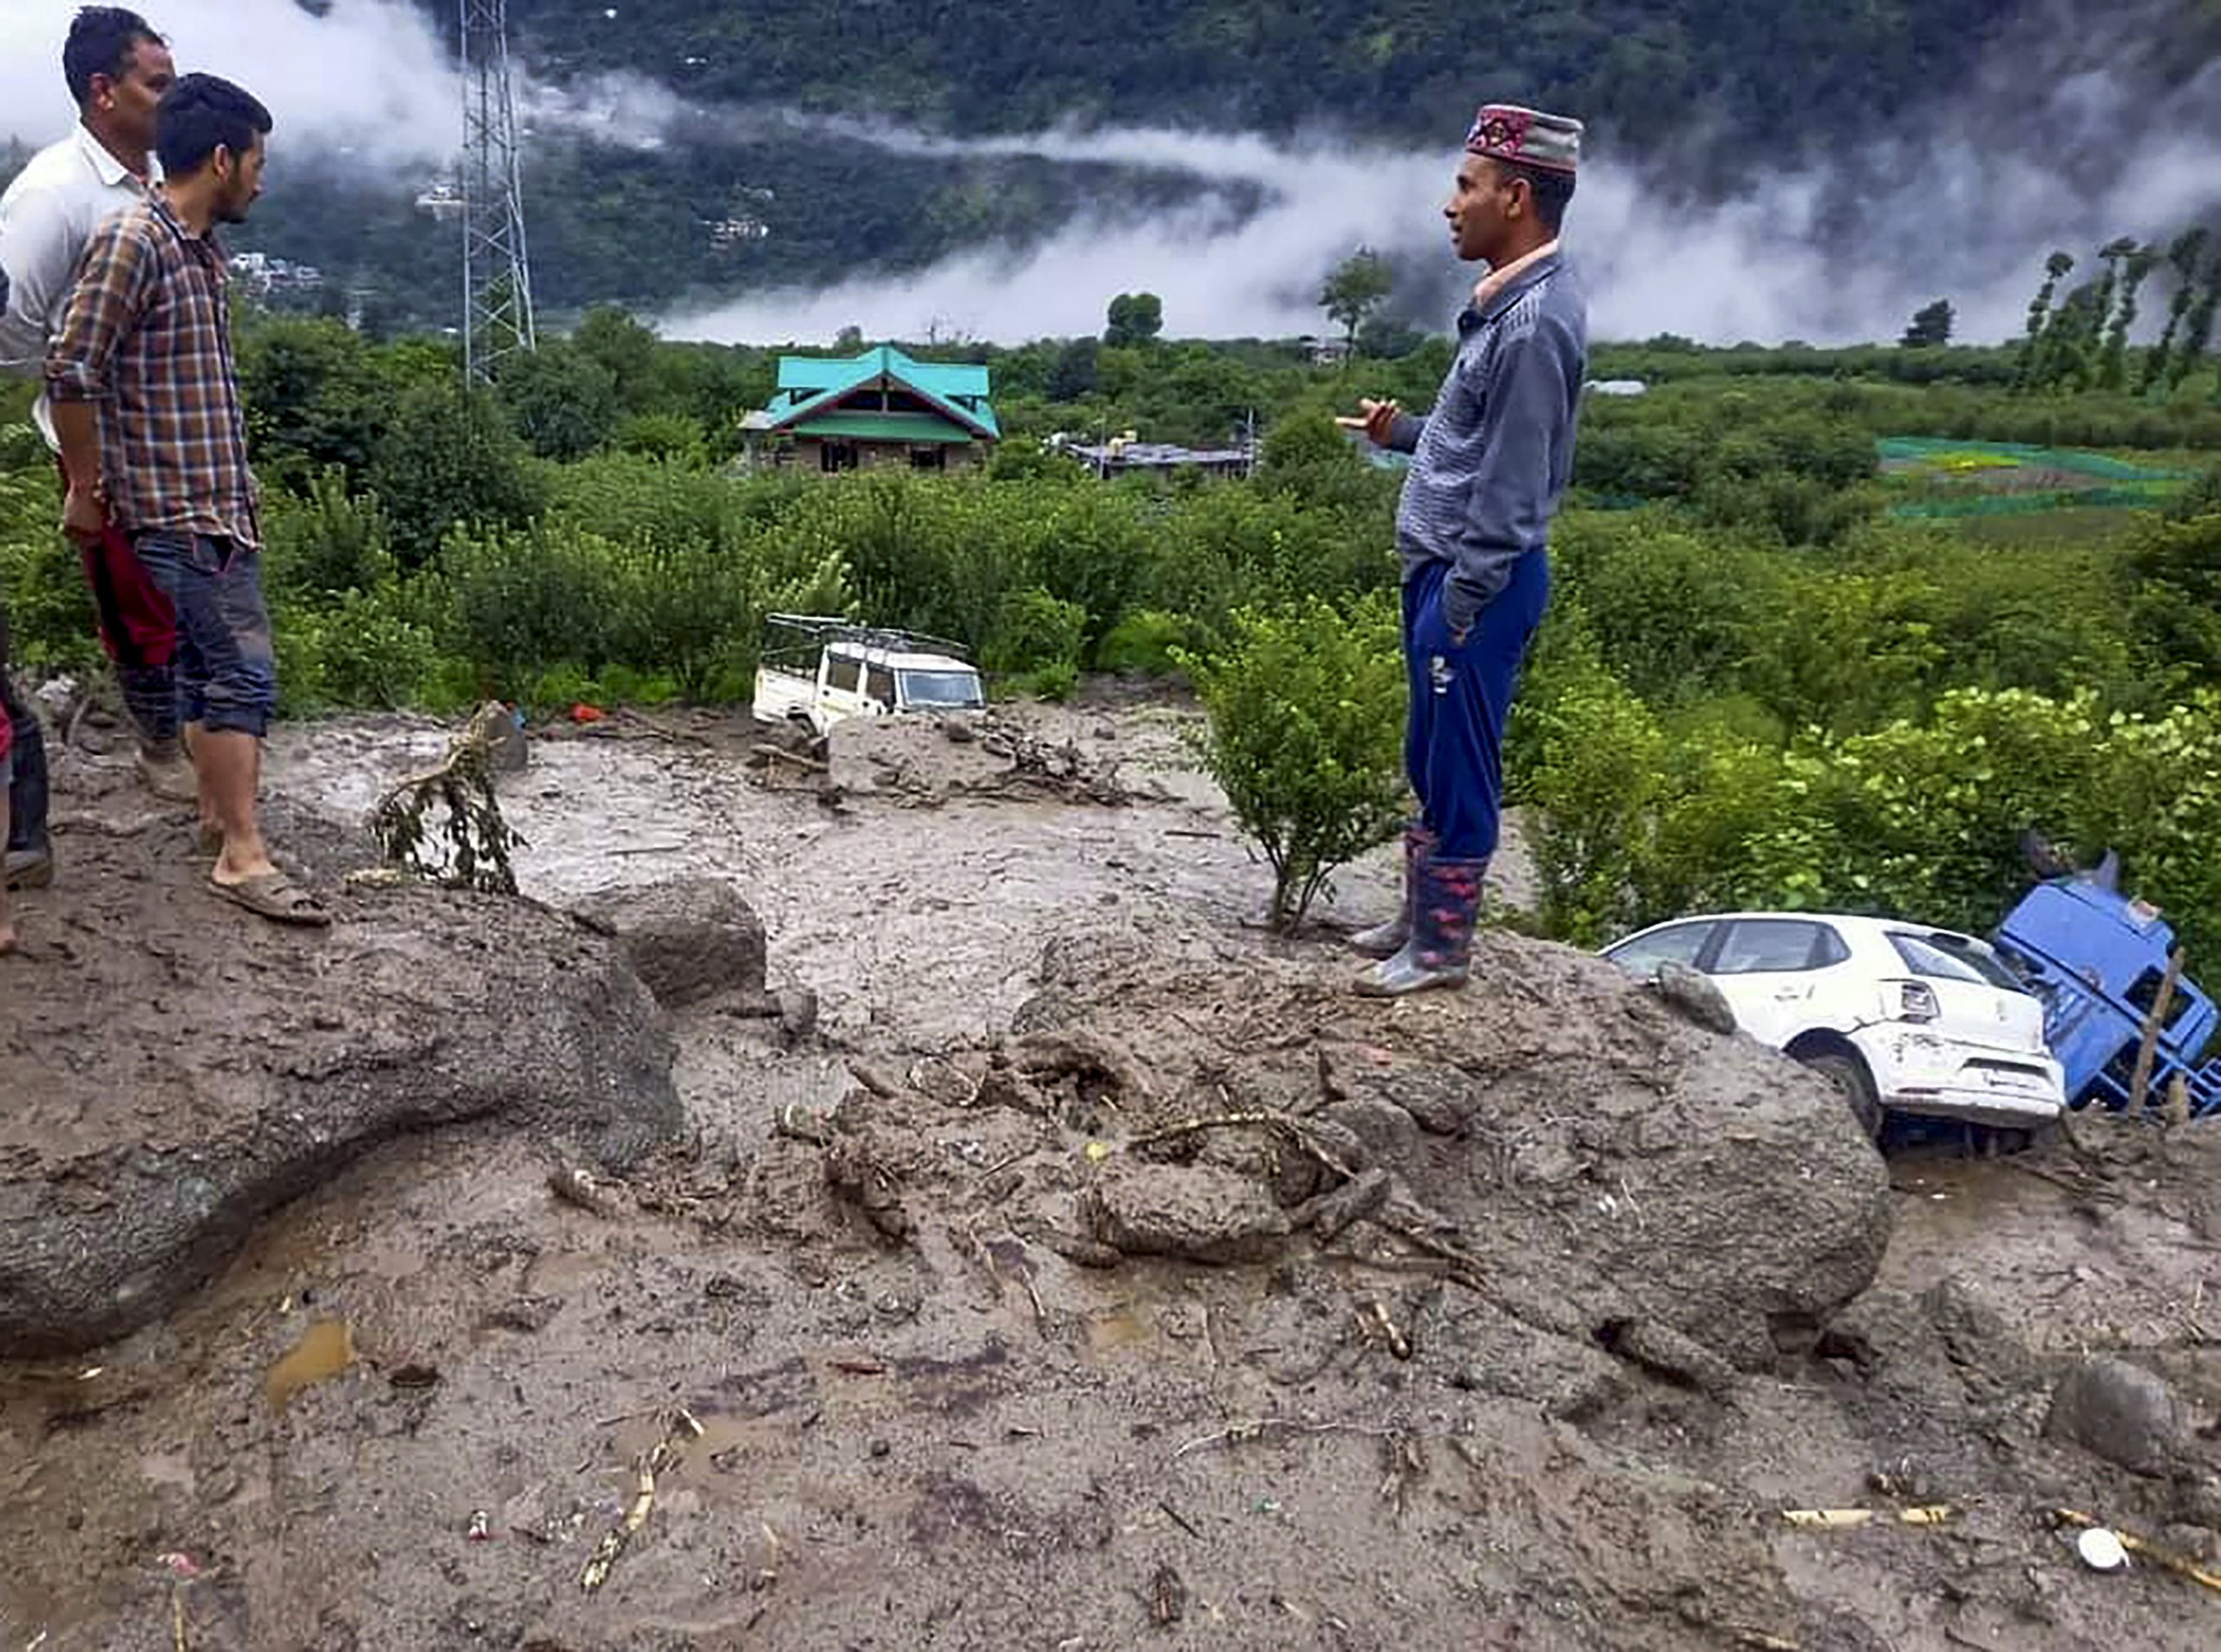 Cloudburst in Kais Nallah of Kharahal Valley of Kullu, one dead, many vehicles damaged